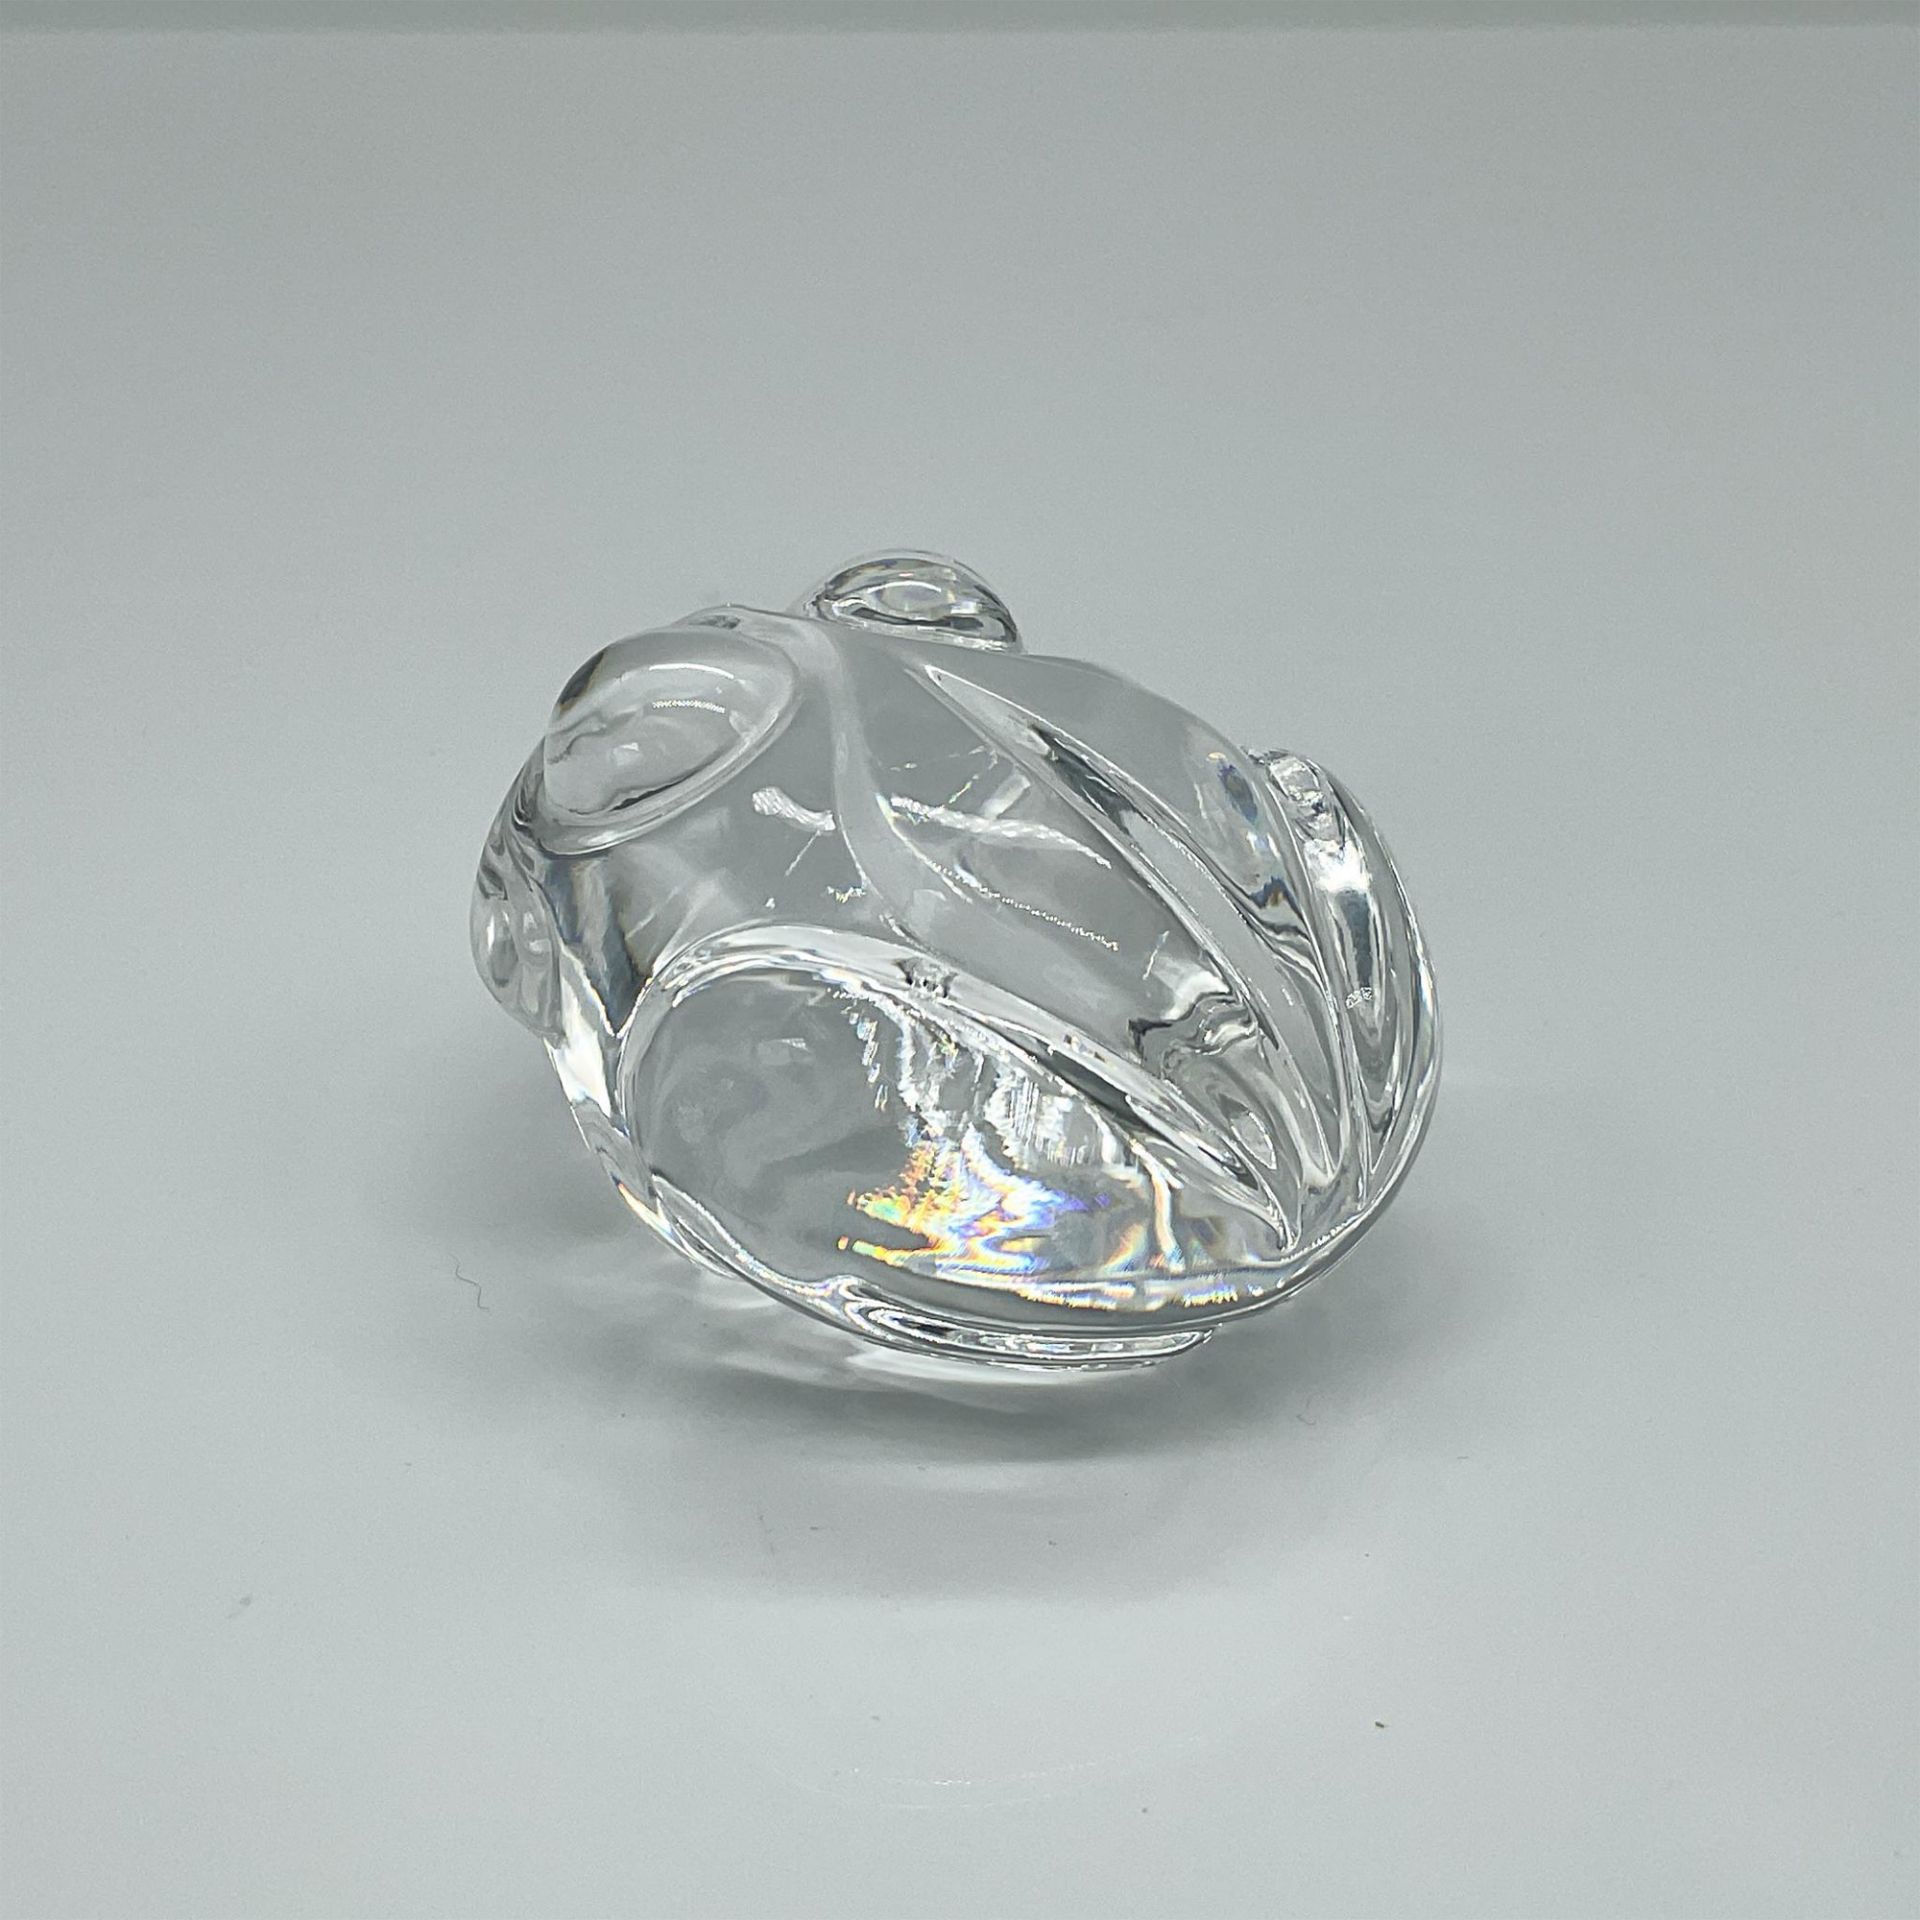 Steuben Glass Crystal Animal Hand Cooler, Frog - Image 2 of 3